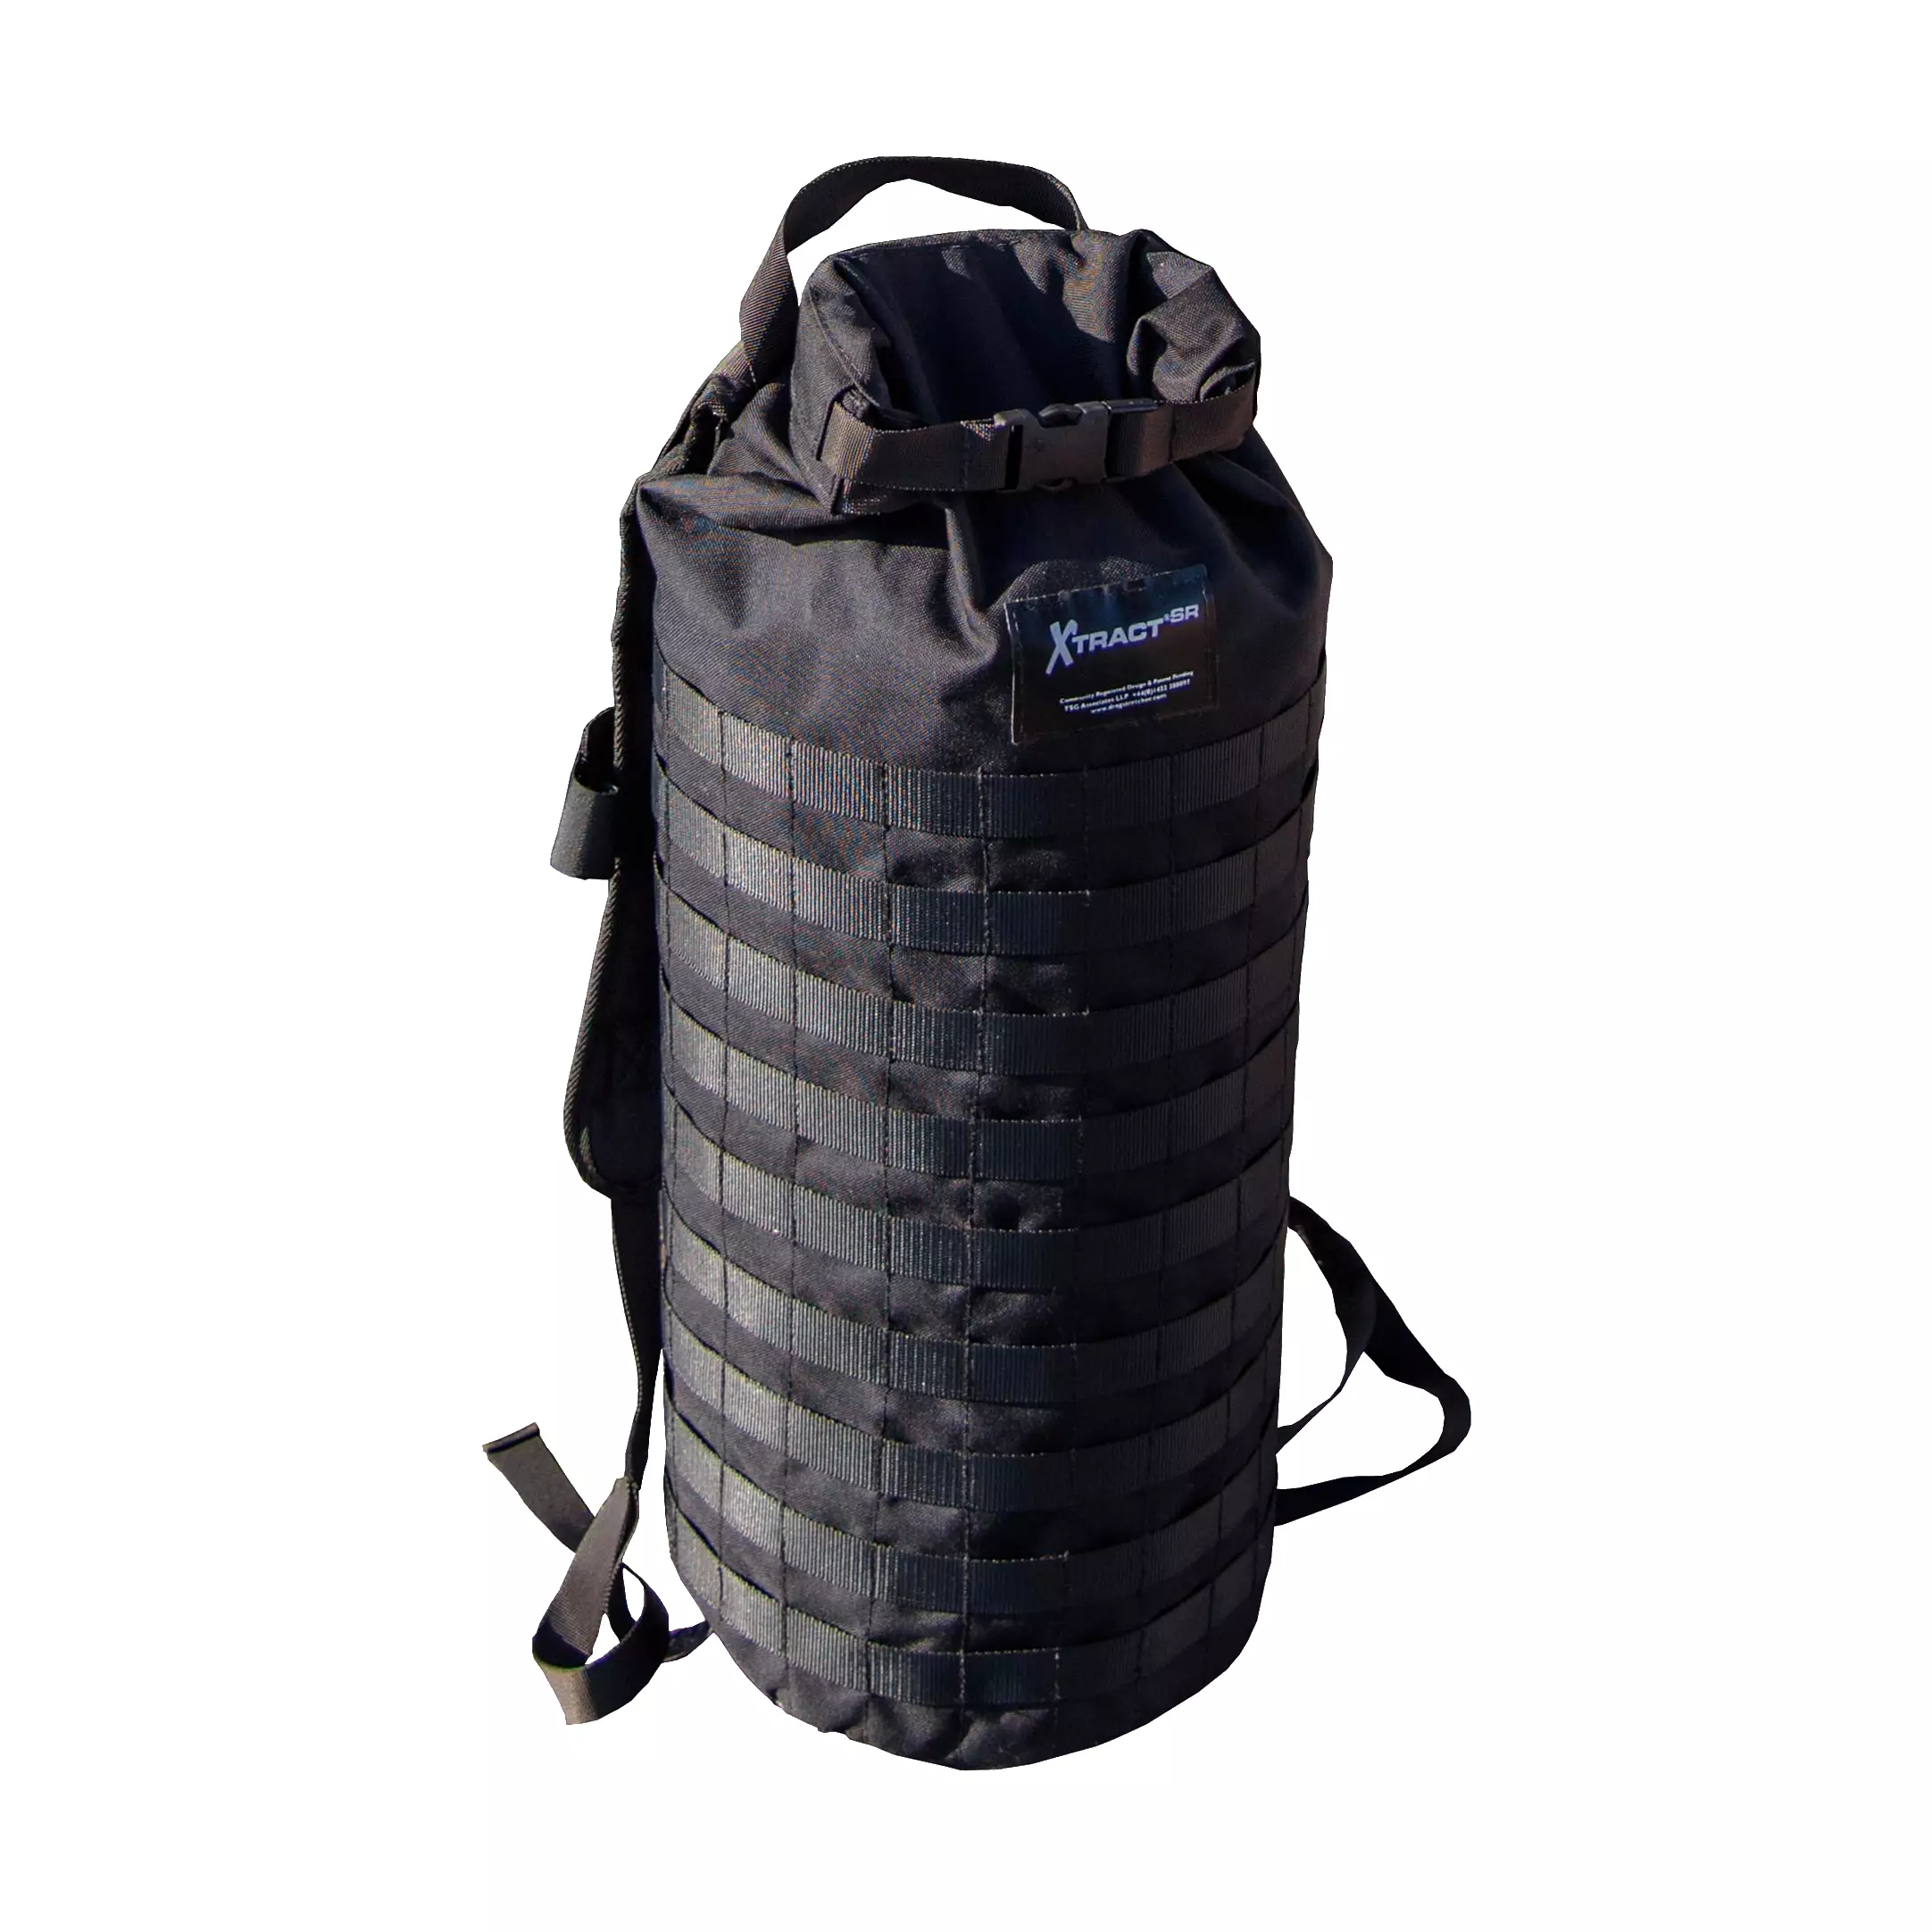 Xtract™ SR backpack